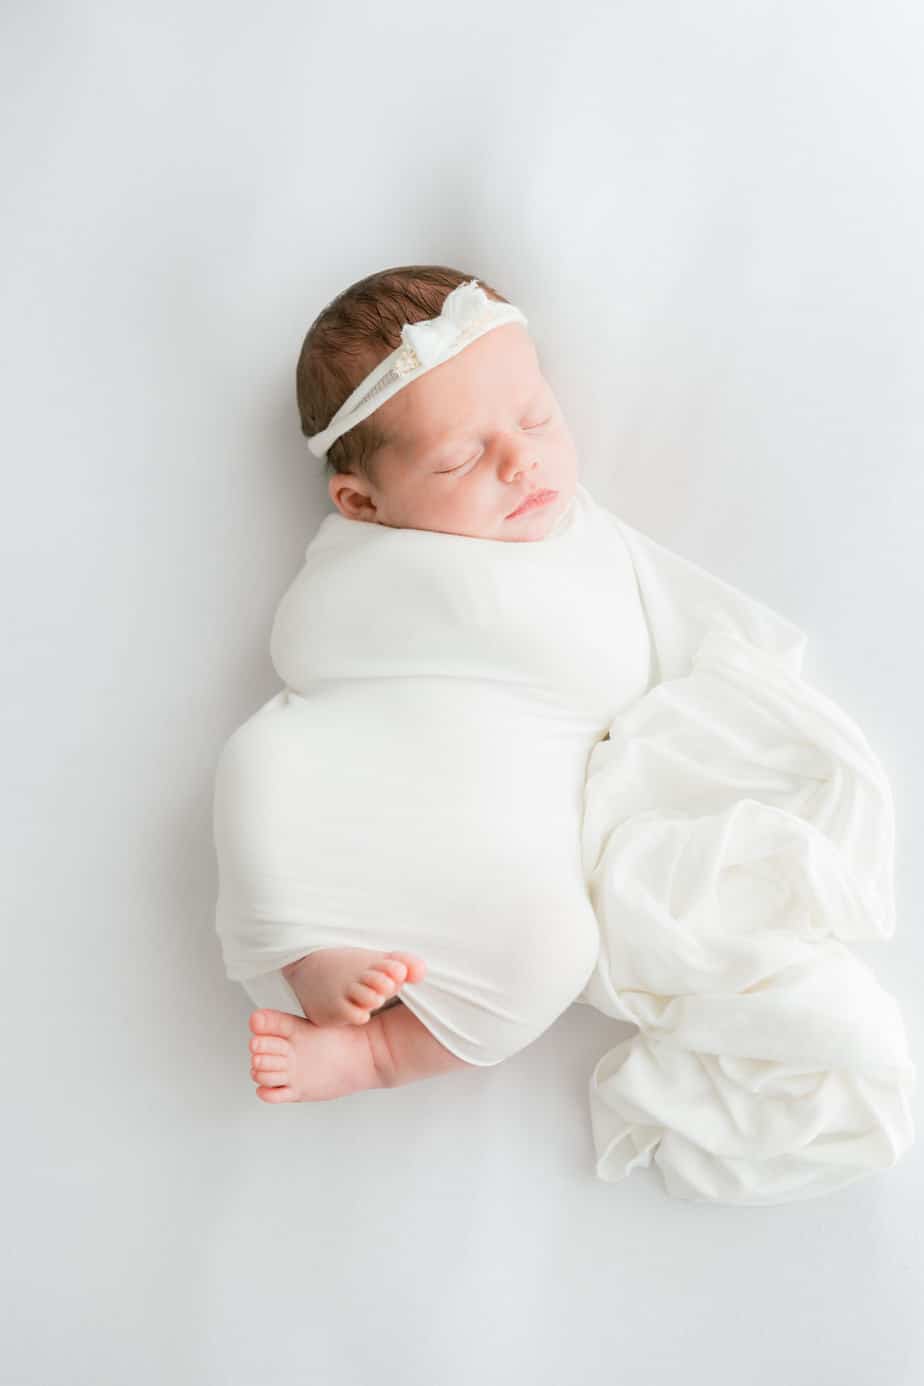 a newborn wrapped in a white wrap